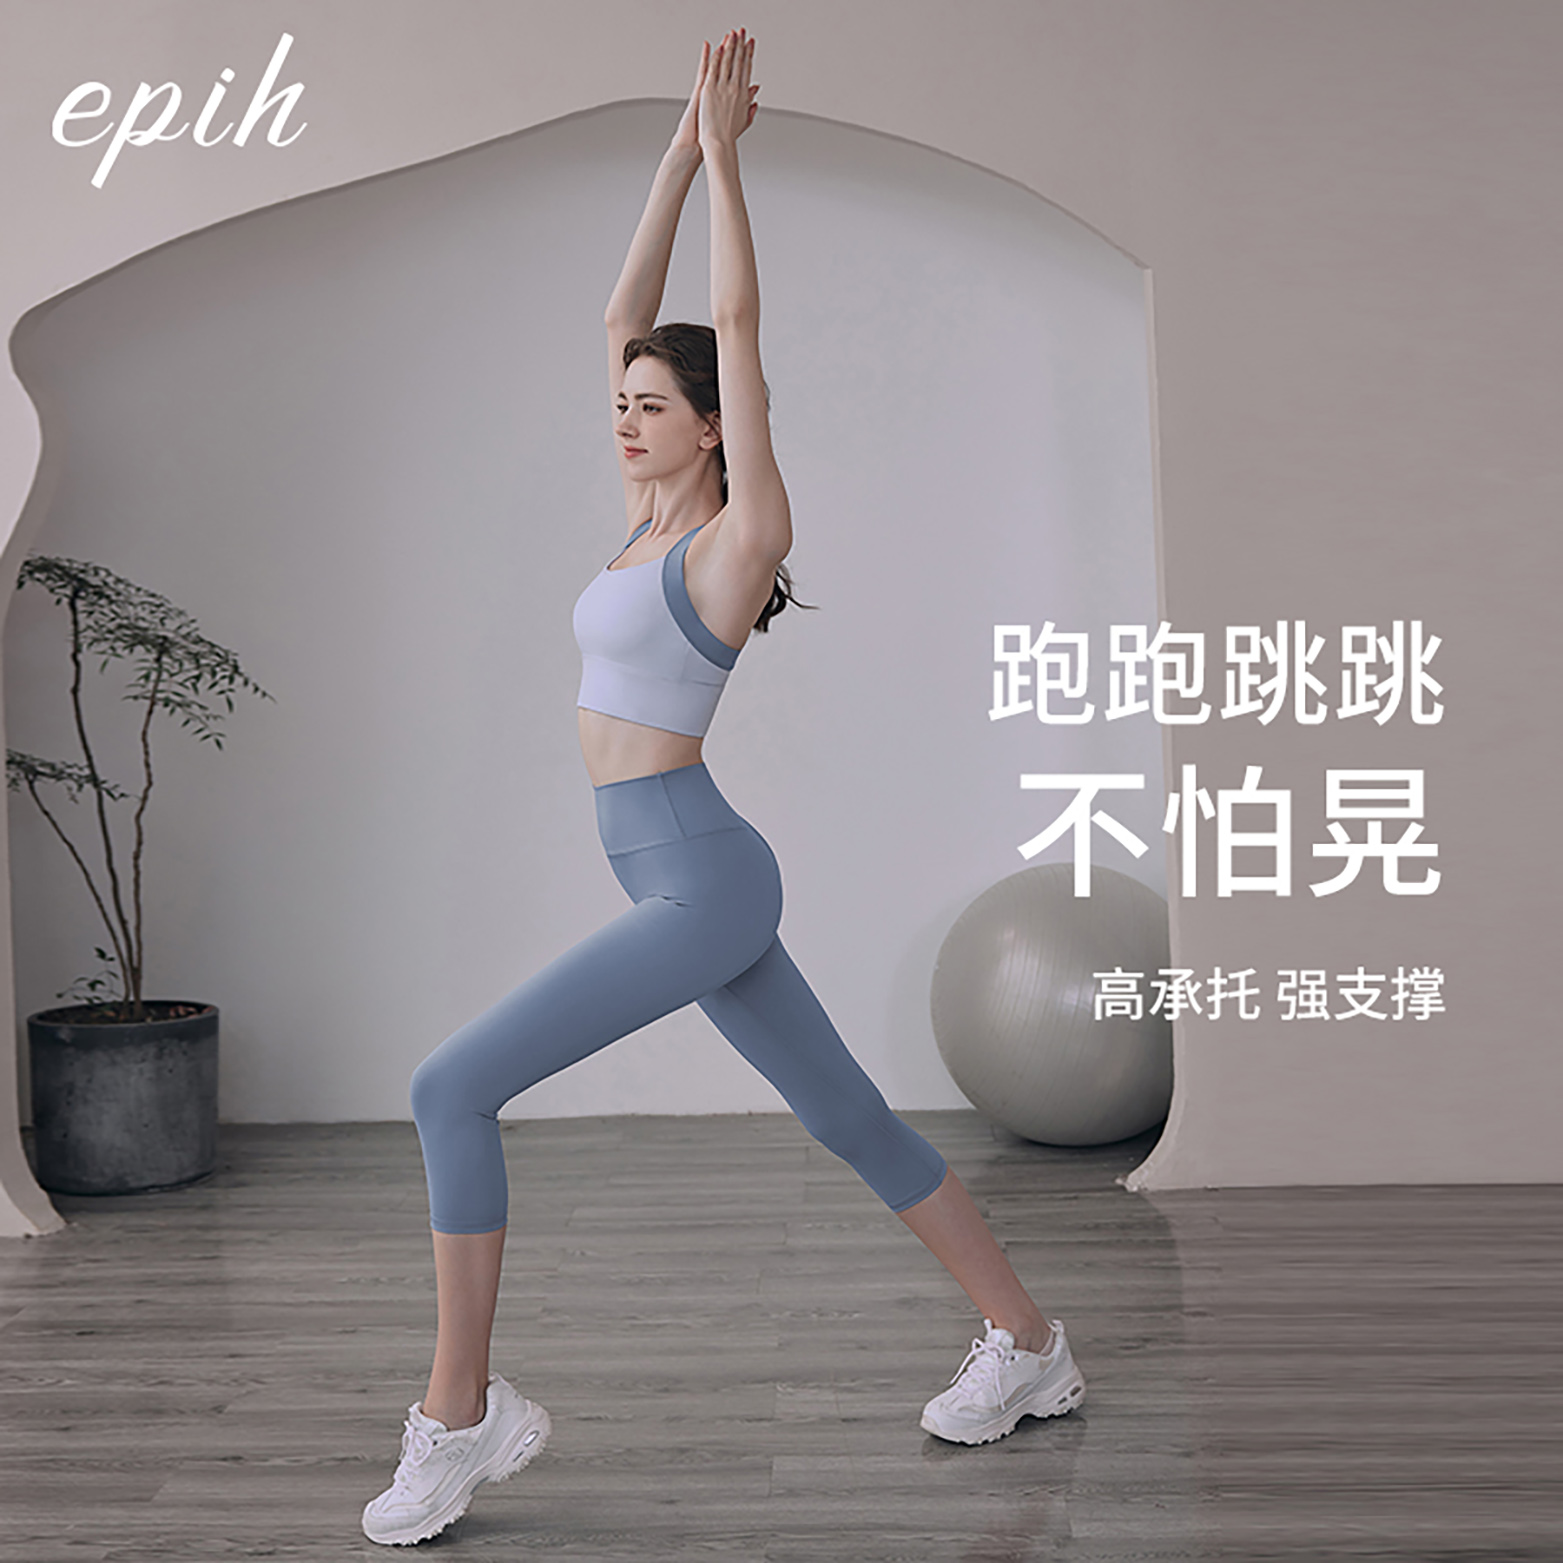 EPIH运动内衣女收副乳高强度防震健身上衣跑步文胸瑜伽服美背背心 - 图1